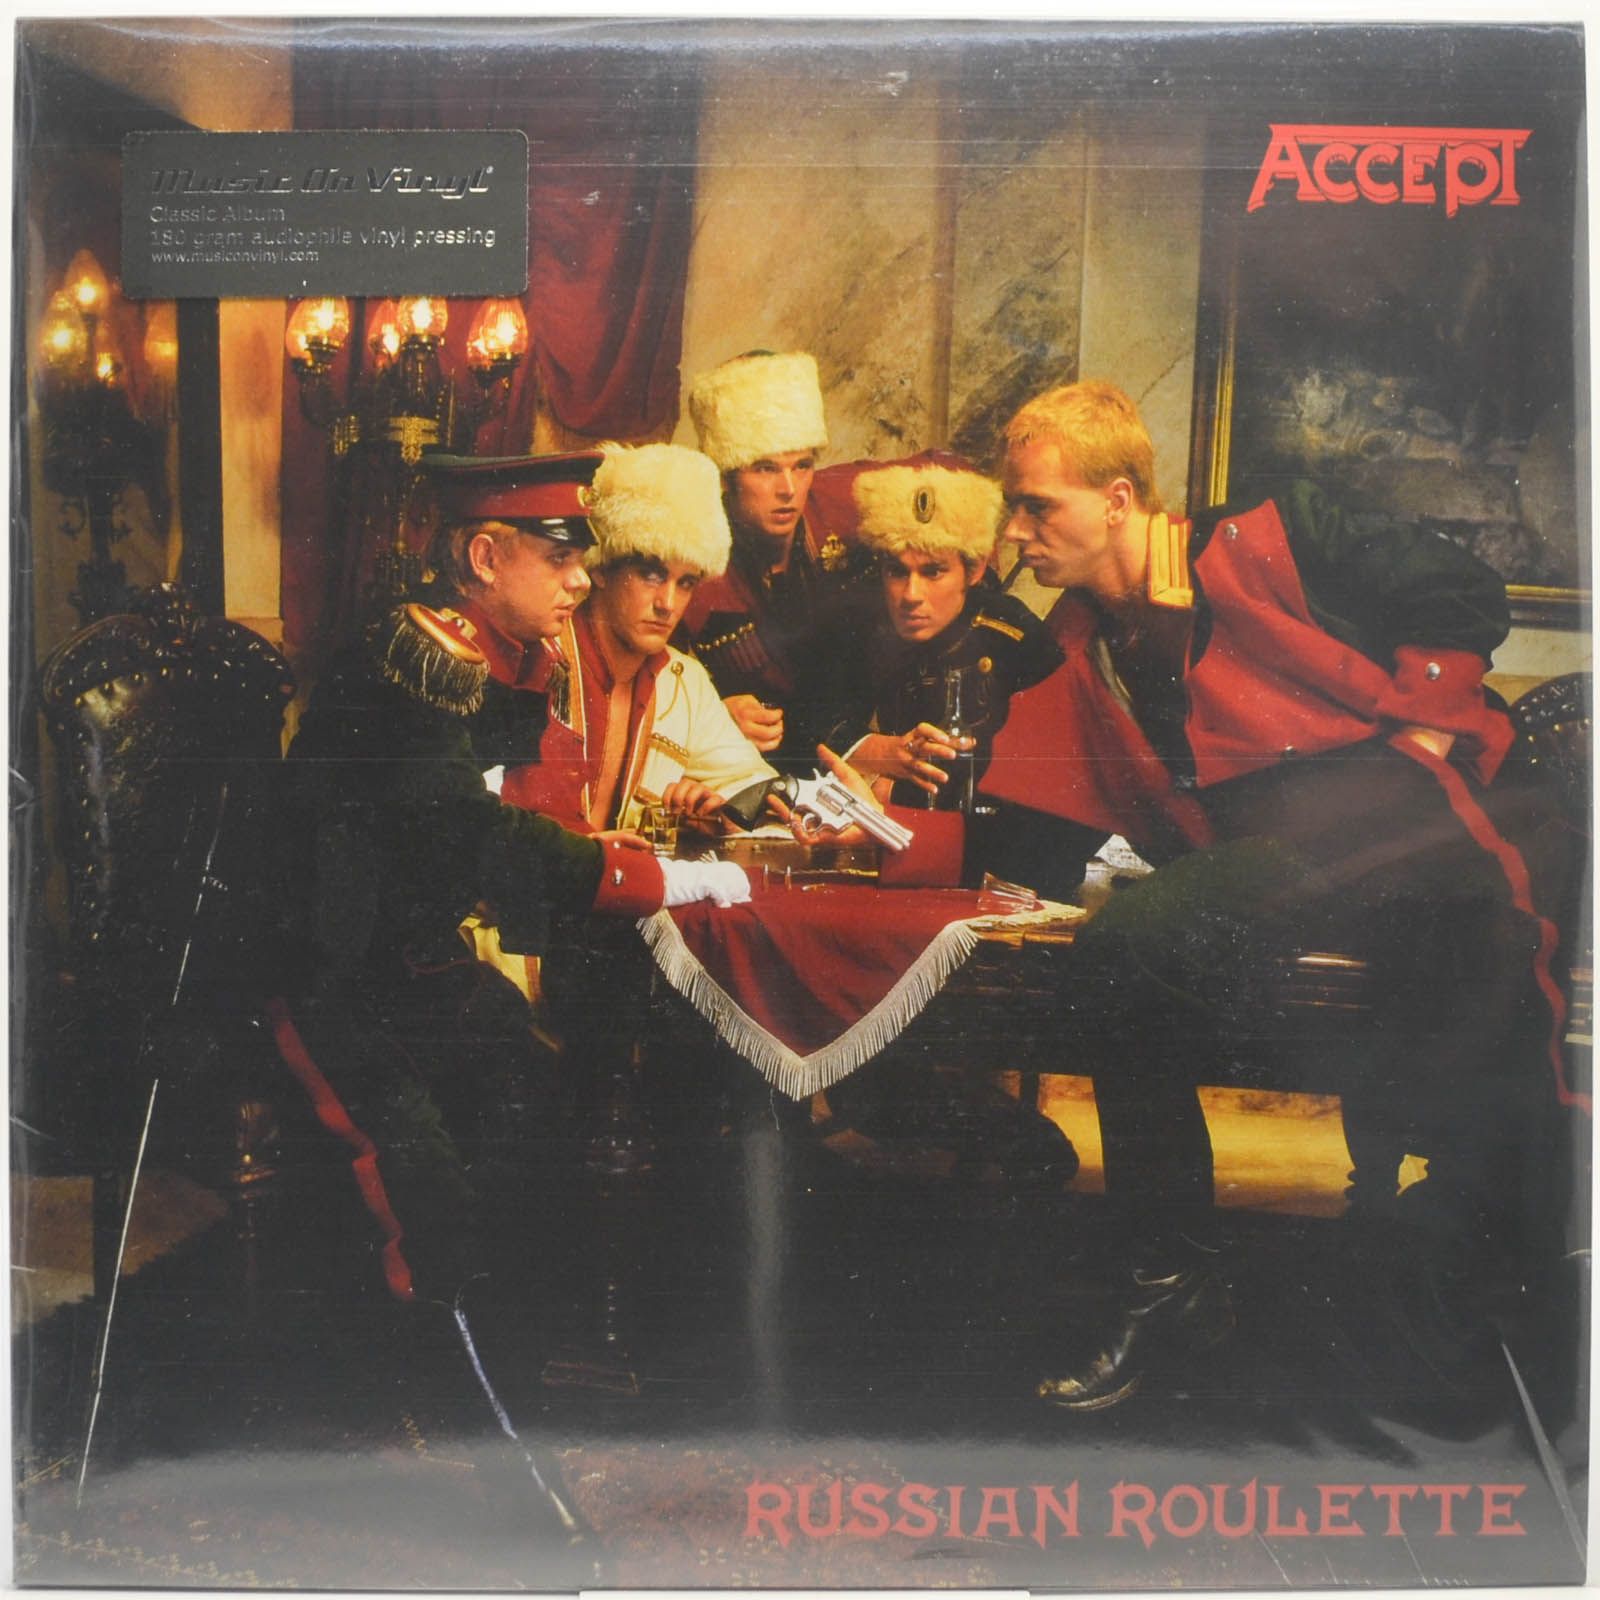 Accept — Russian Roulette, 1986